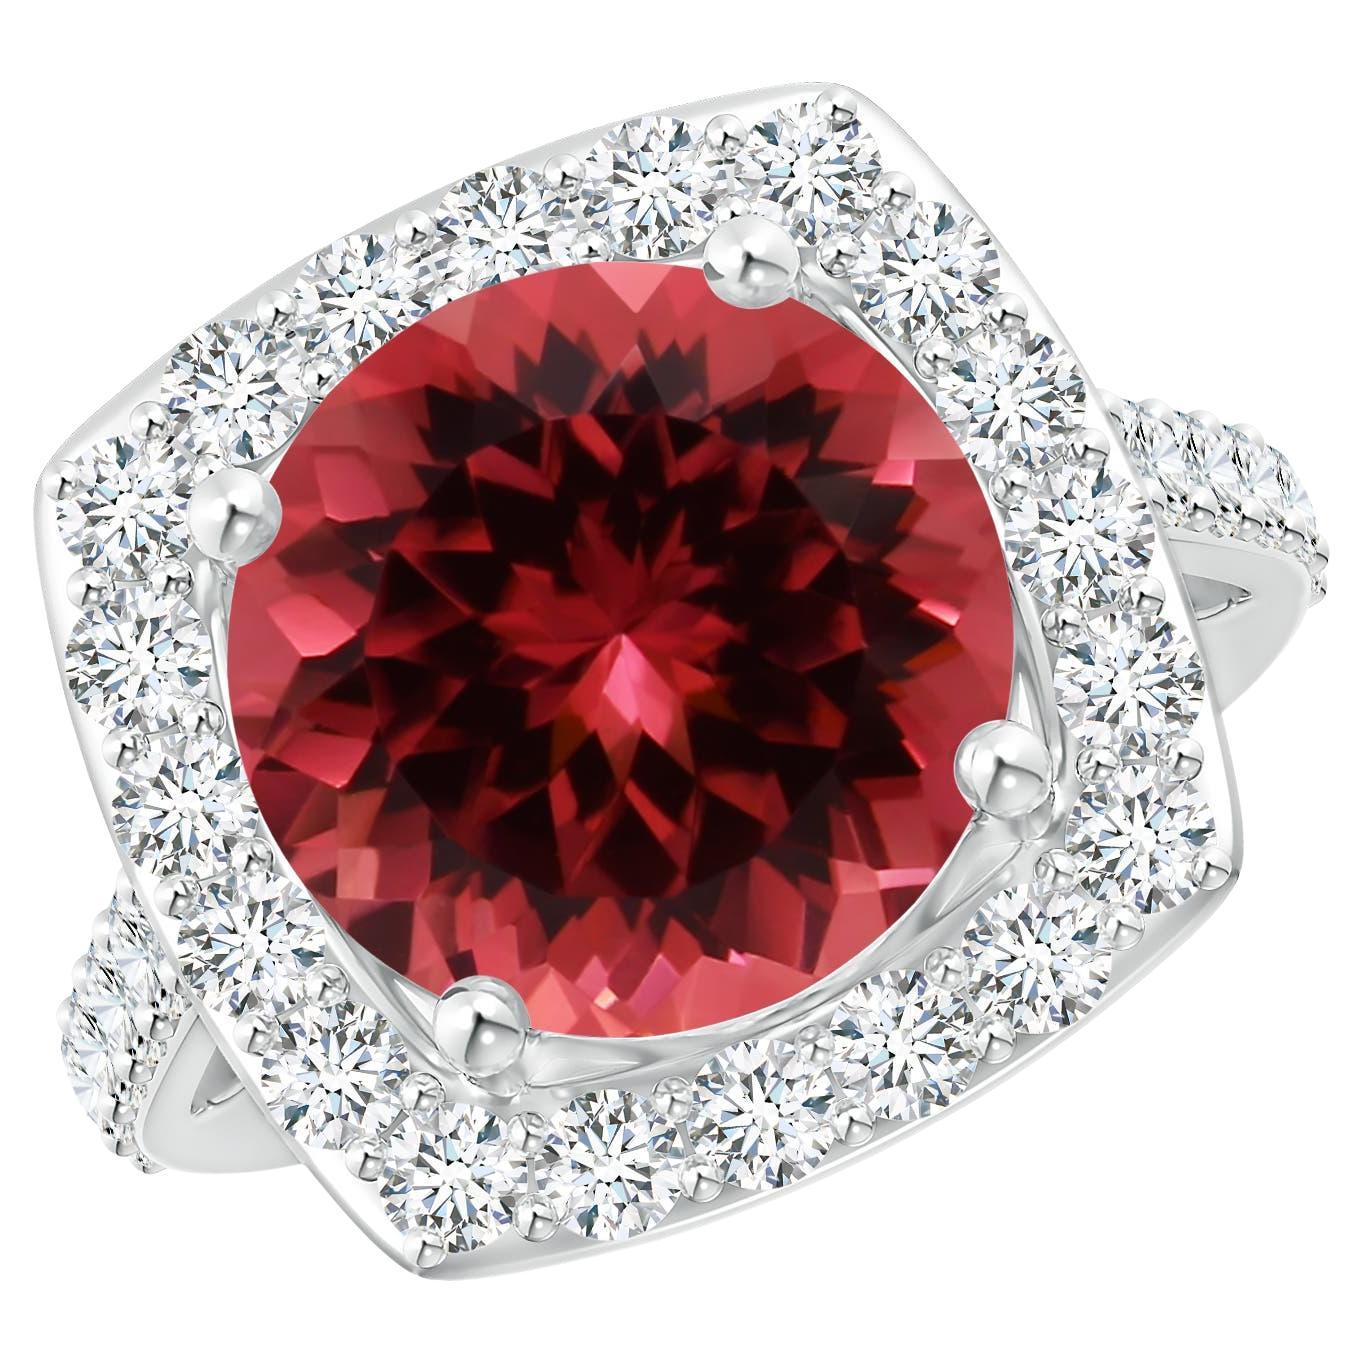 ANGARA Bague halo de diamants et tourmaline rose de 2,15 carats certifiée GIA en or blanc 14 carats